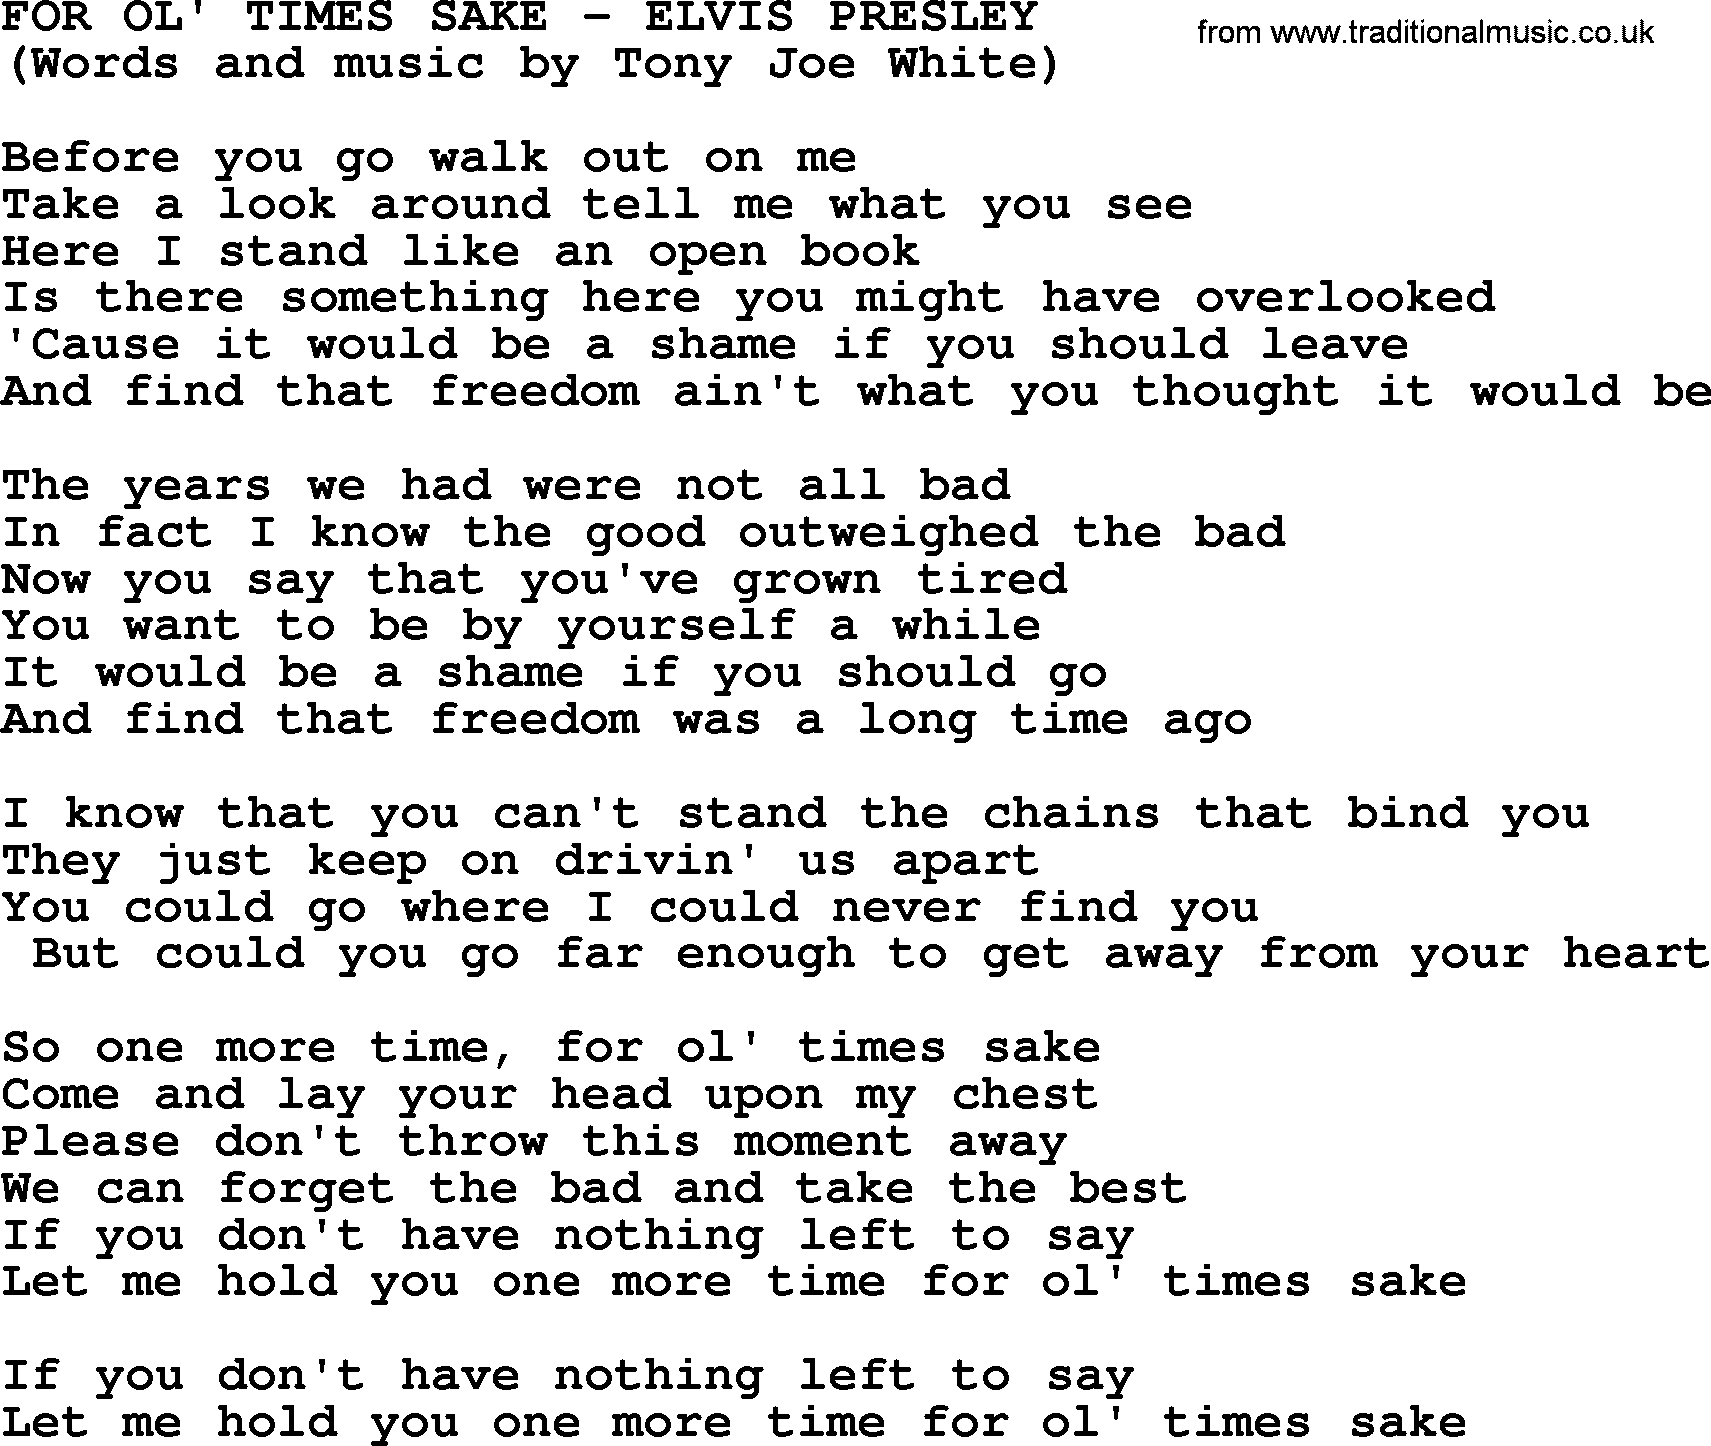 Elvis Presley song: For Ol' Times Sake lyrics